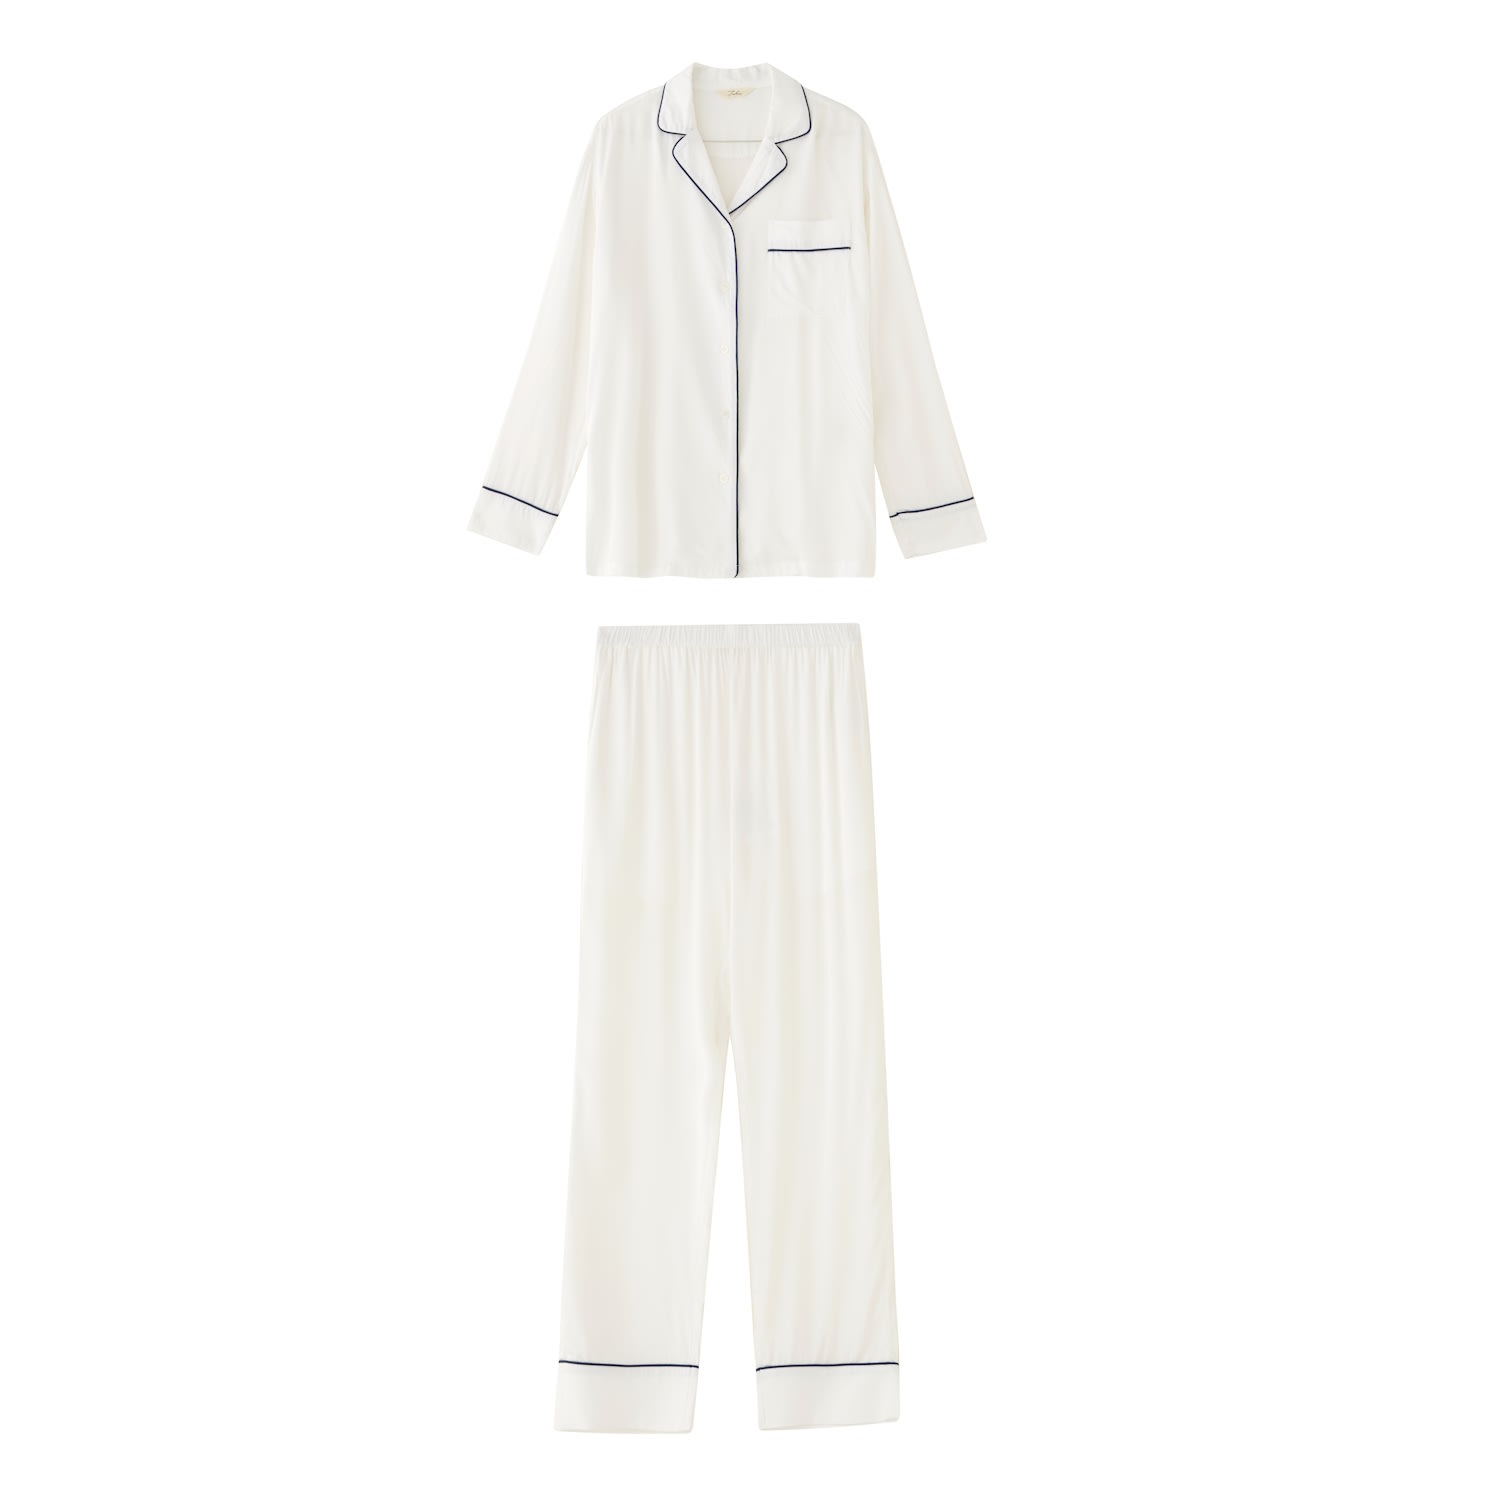 Men’s Comfort Bamboo Pajama Set - White Small Notlabeled